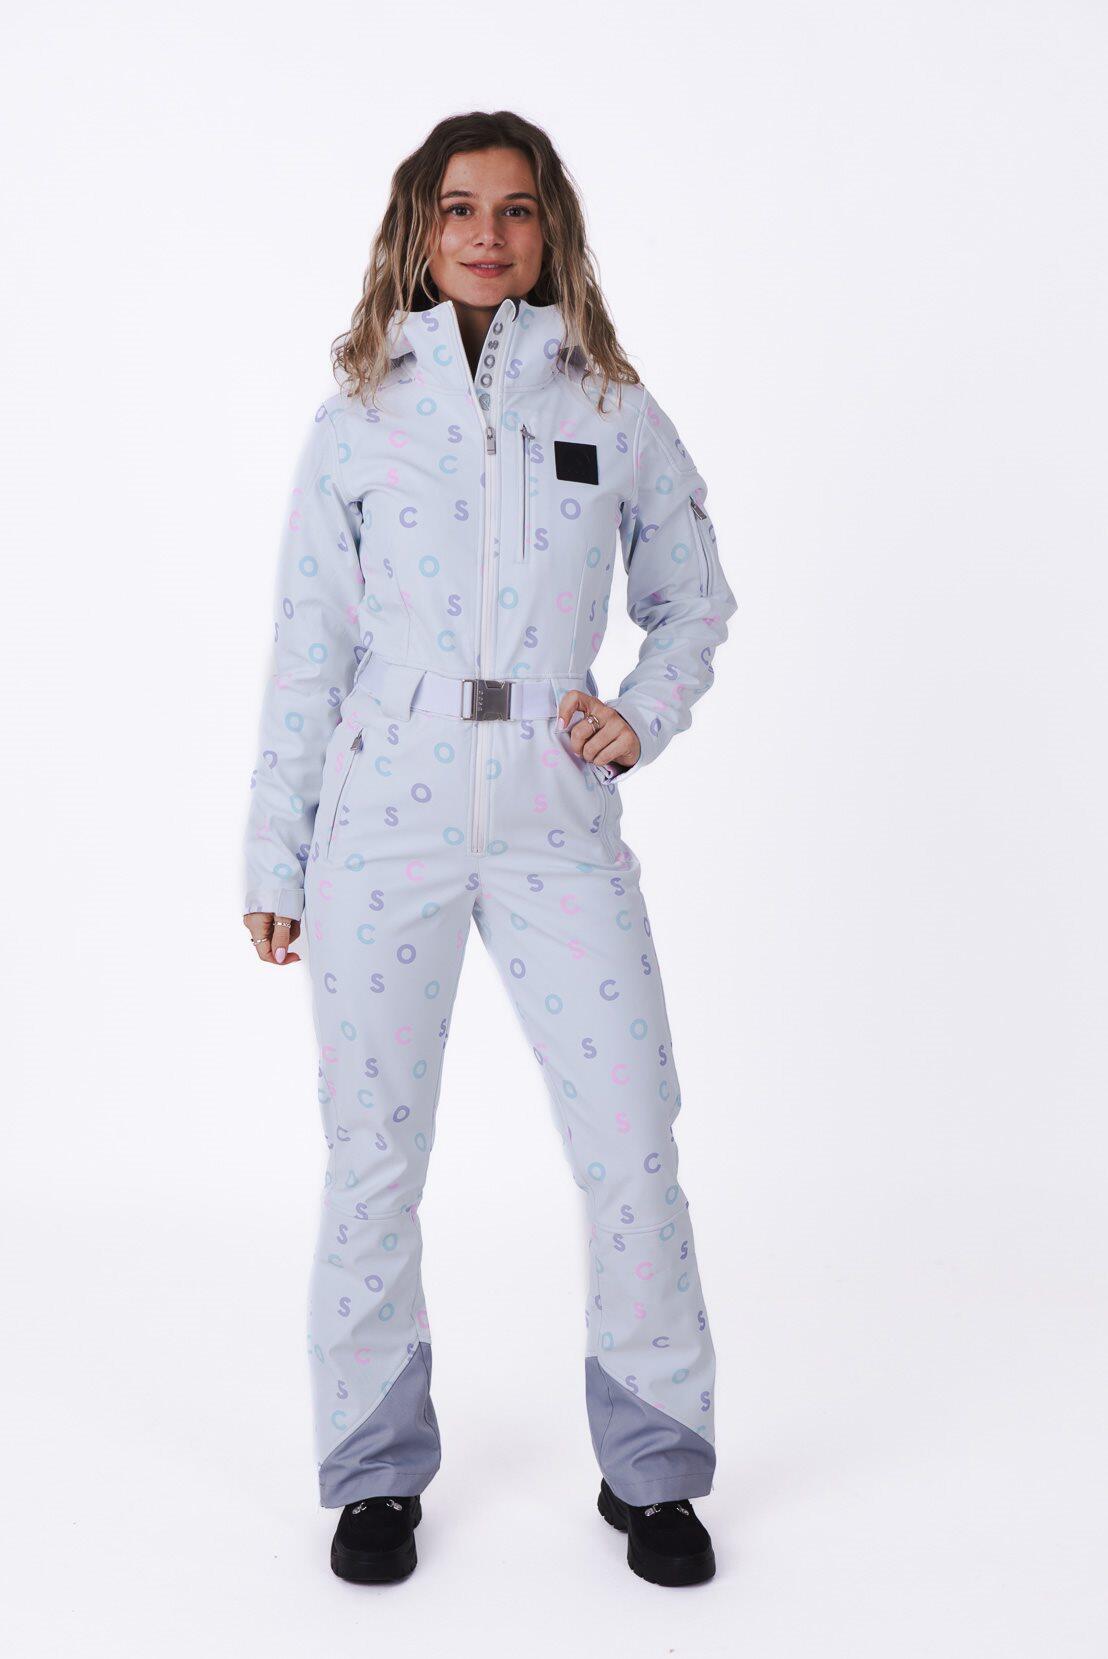 OOSC White OOSC Print Chic Ski Suit